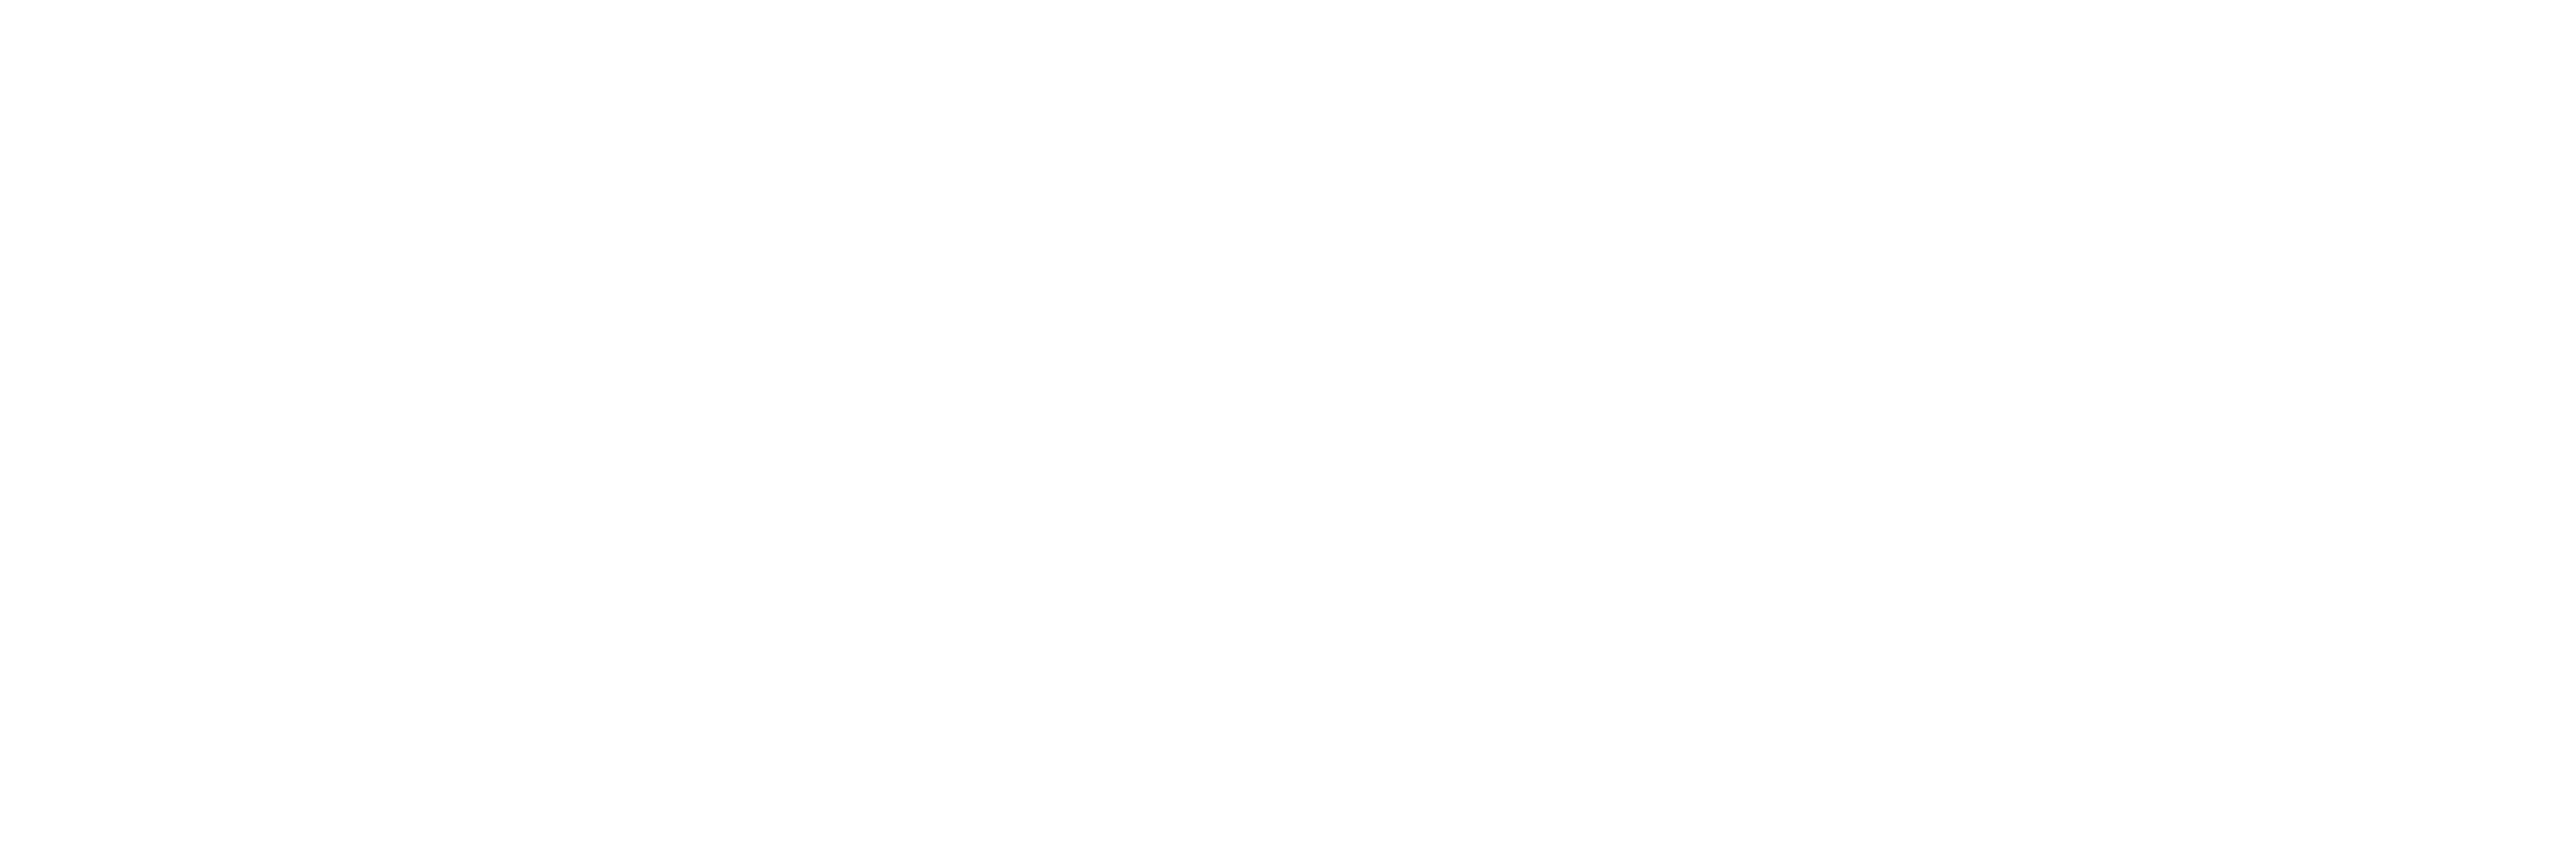 Meadowlands Logo